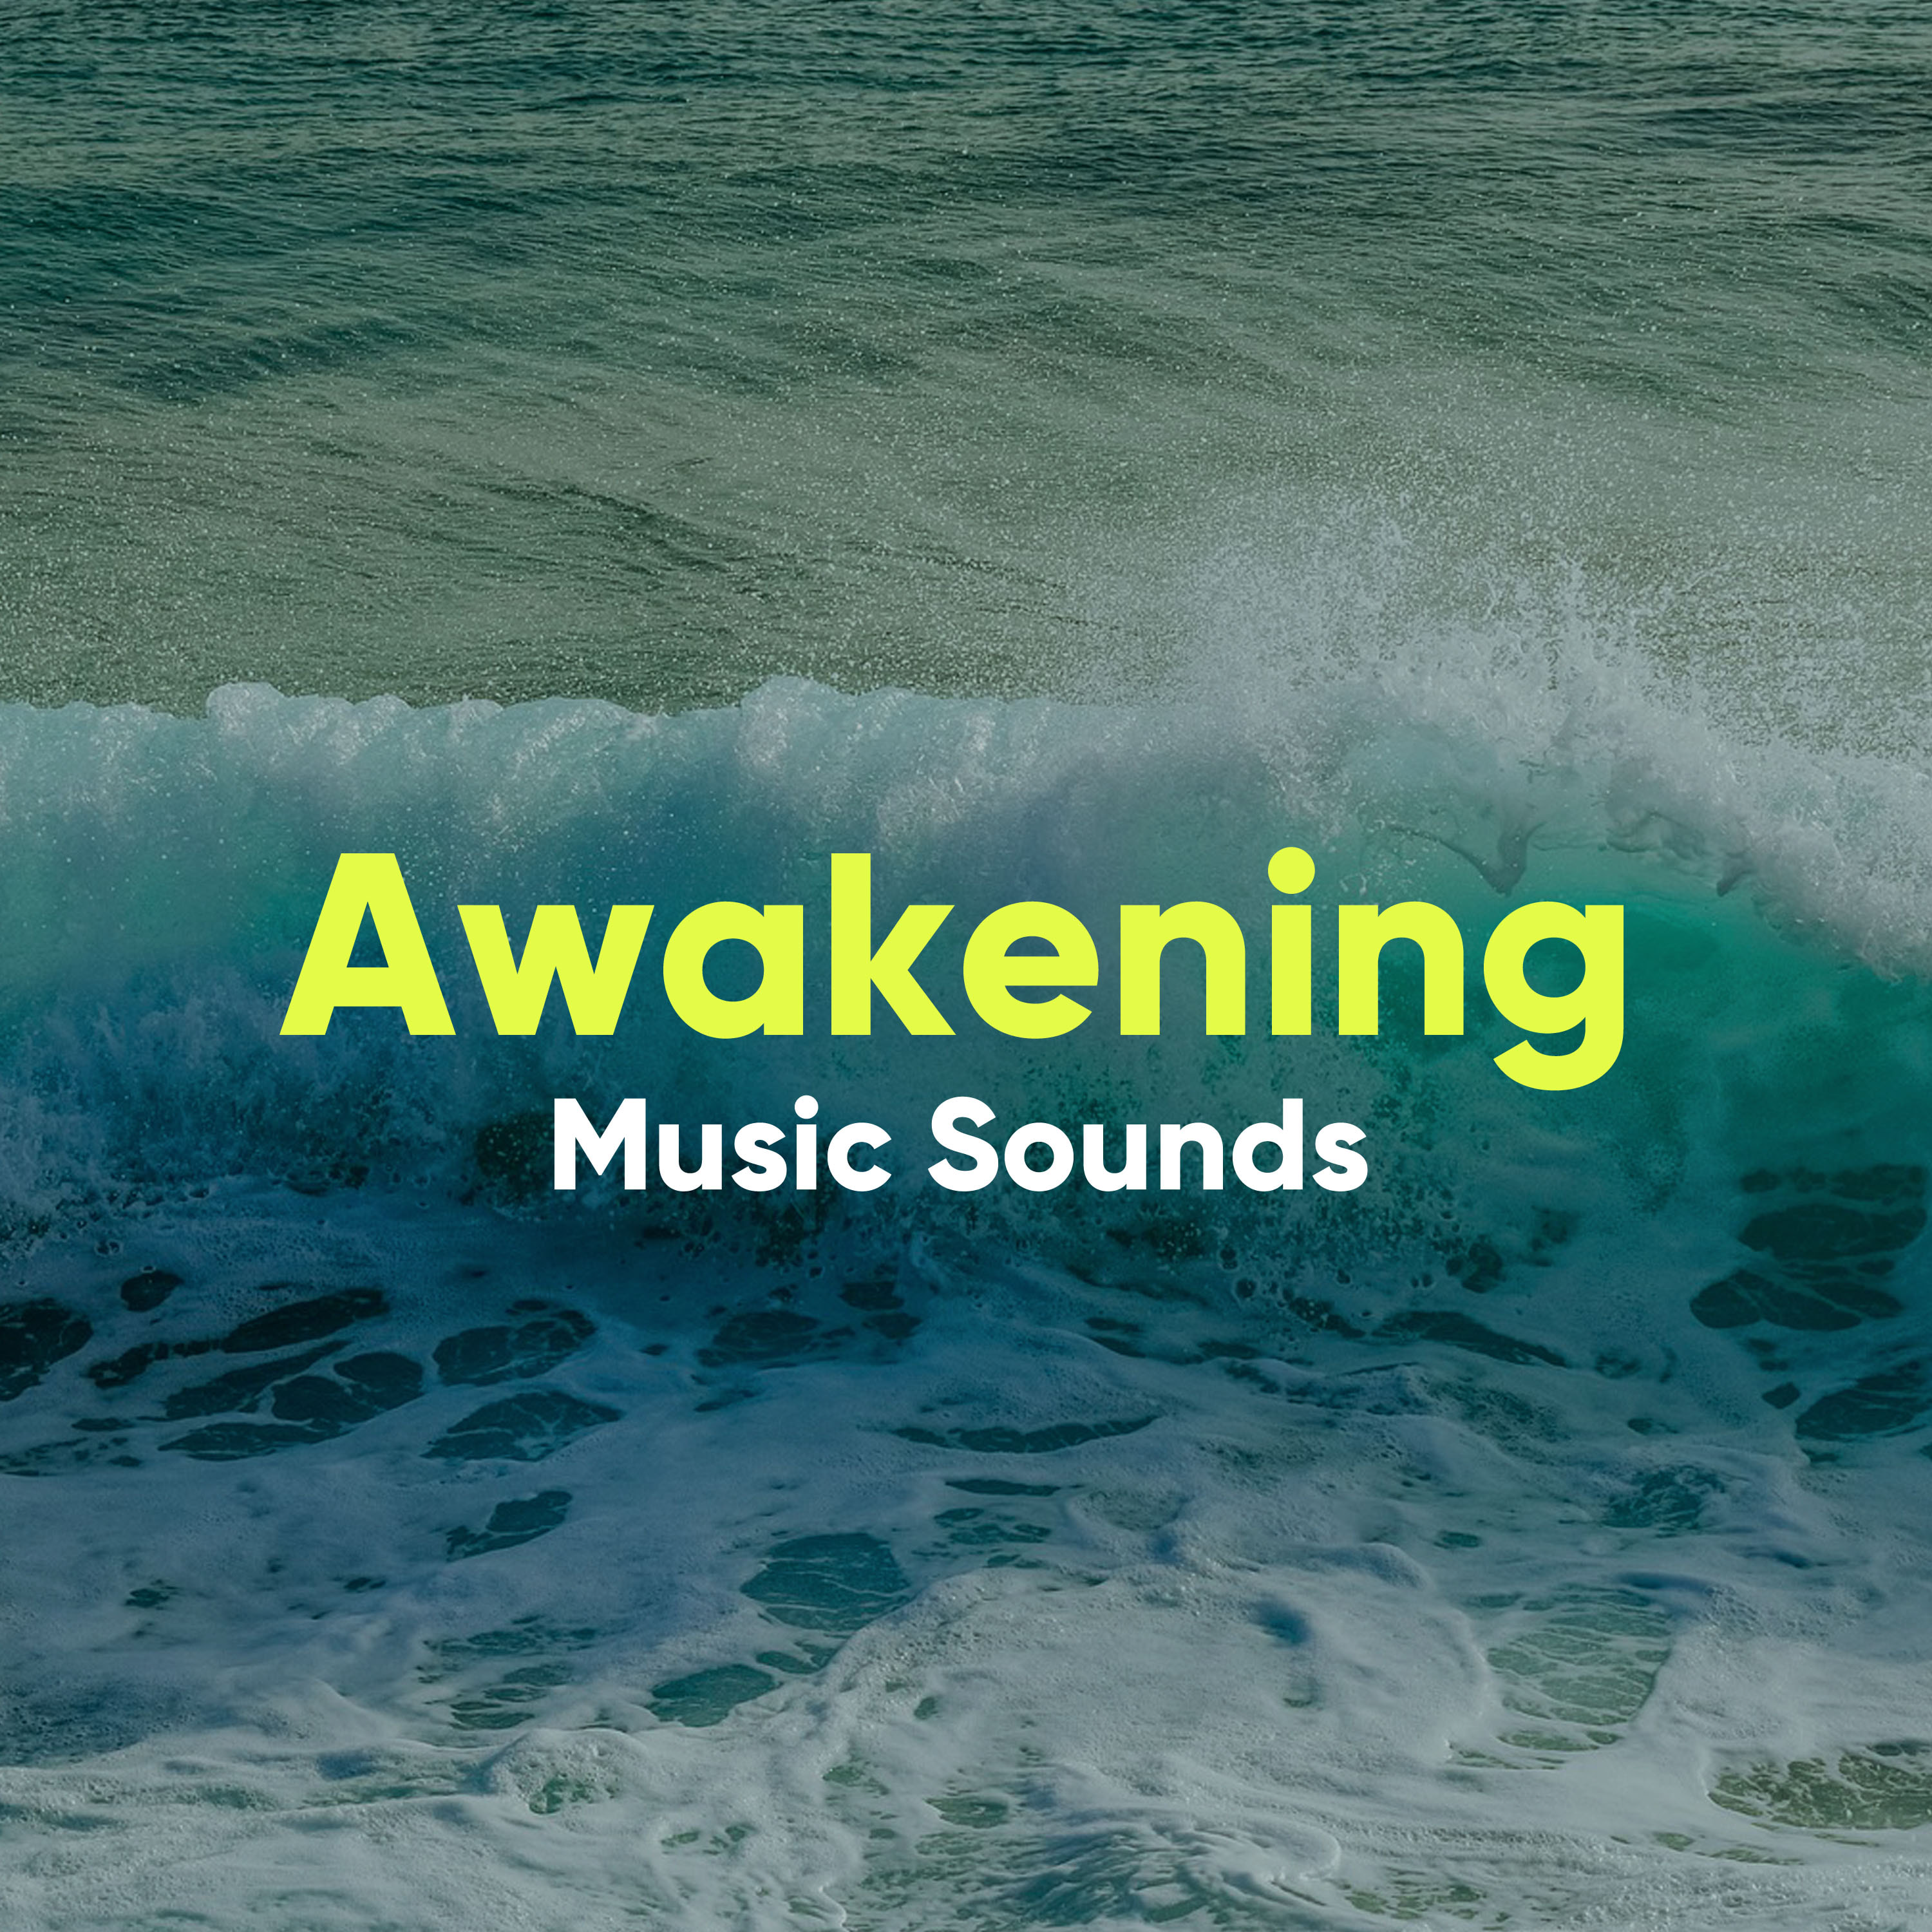 Awakening Music Sounds for Spa Treatment